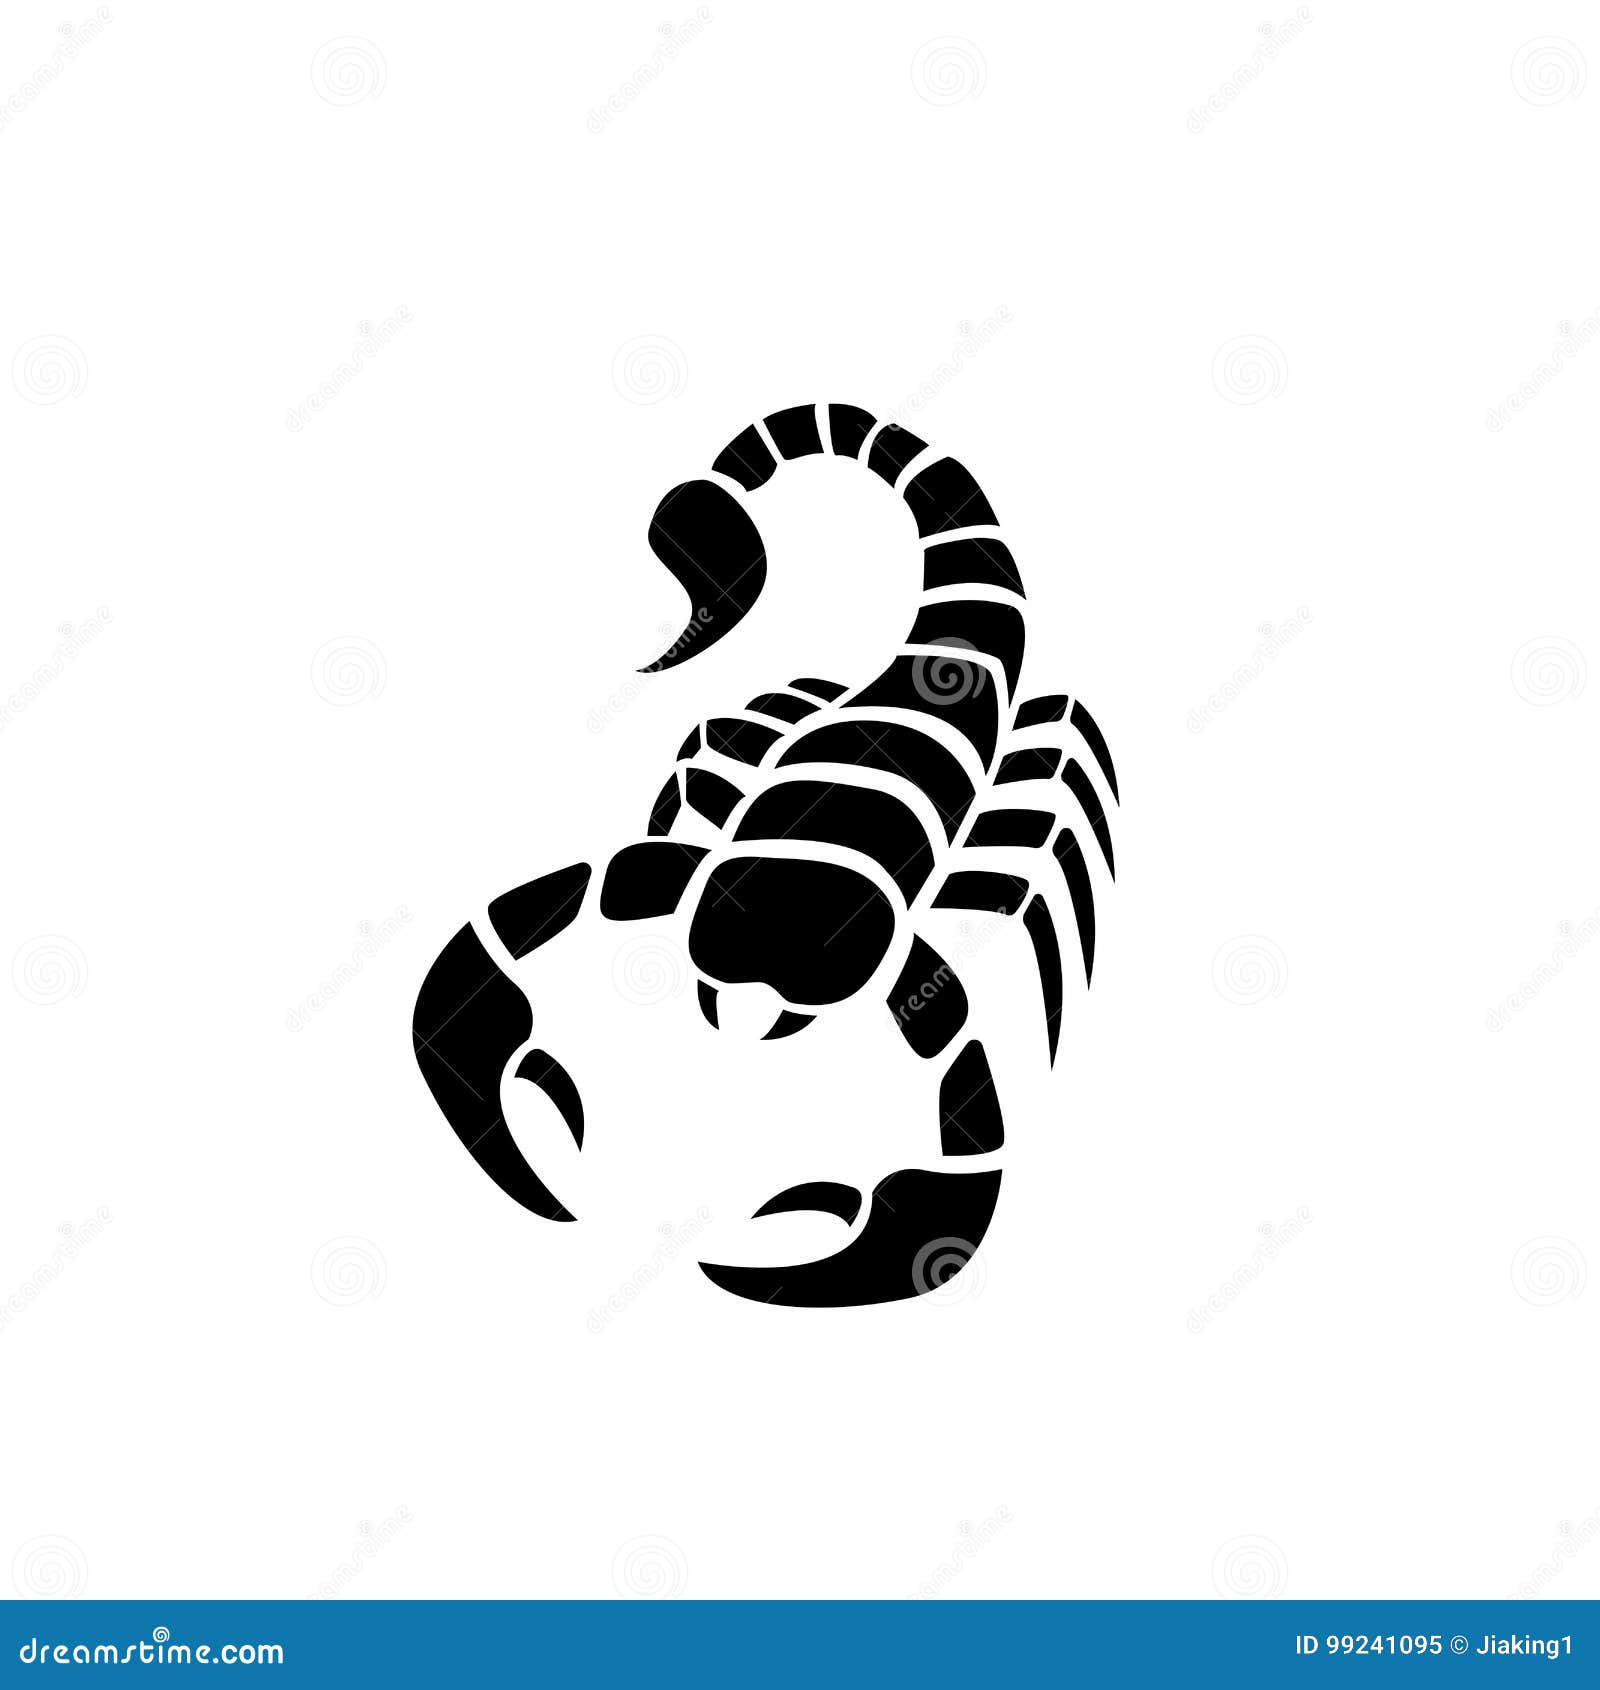 Scorpion Tattoo Designs & Ideas for Men and Women